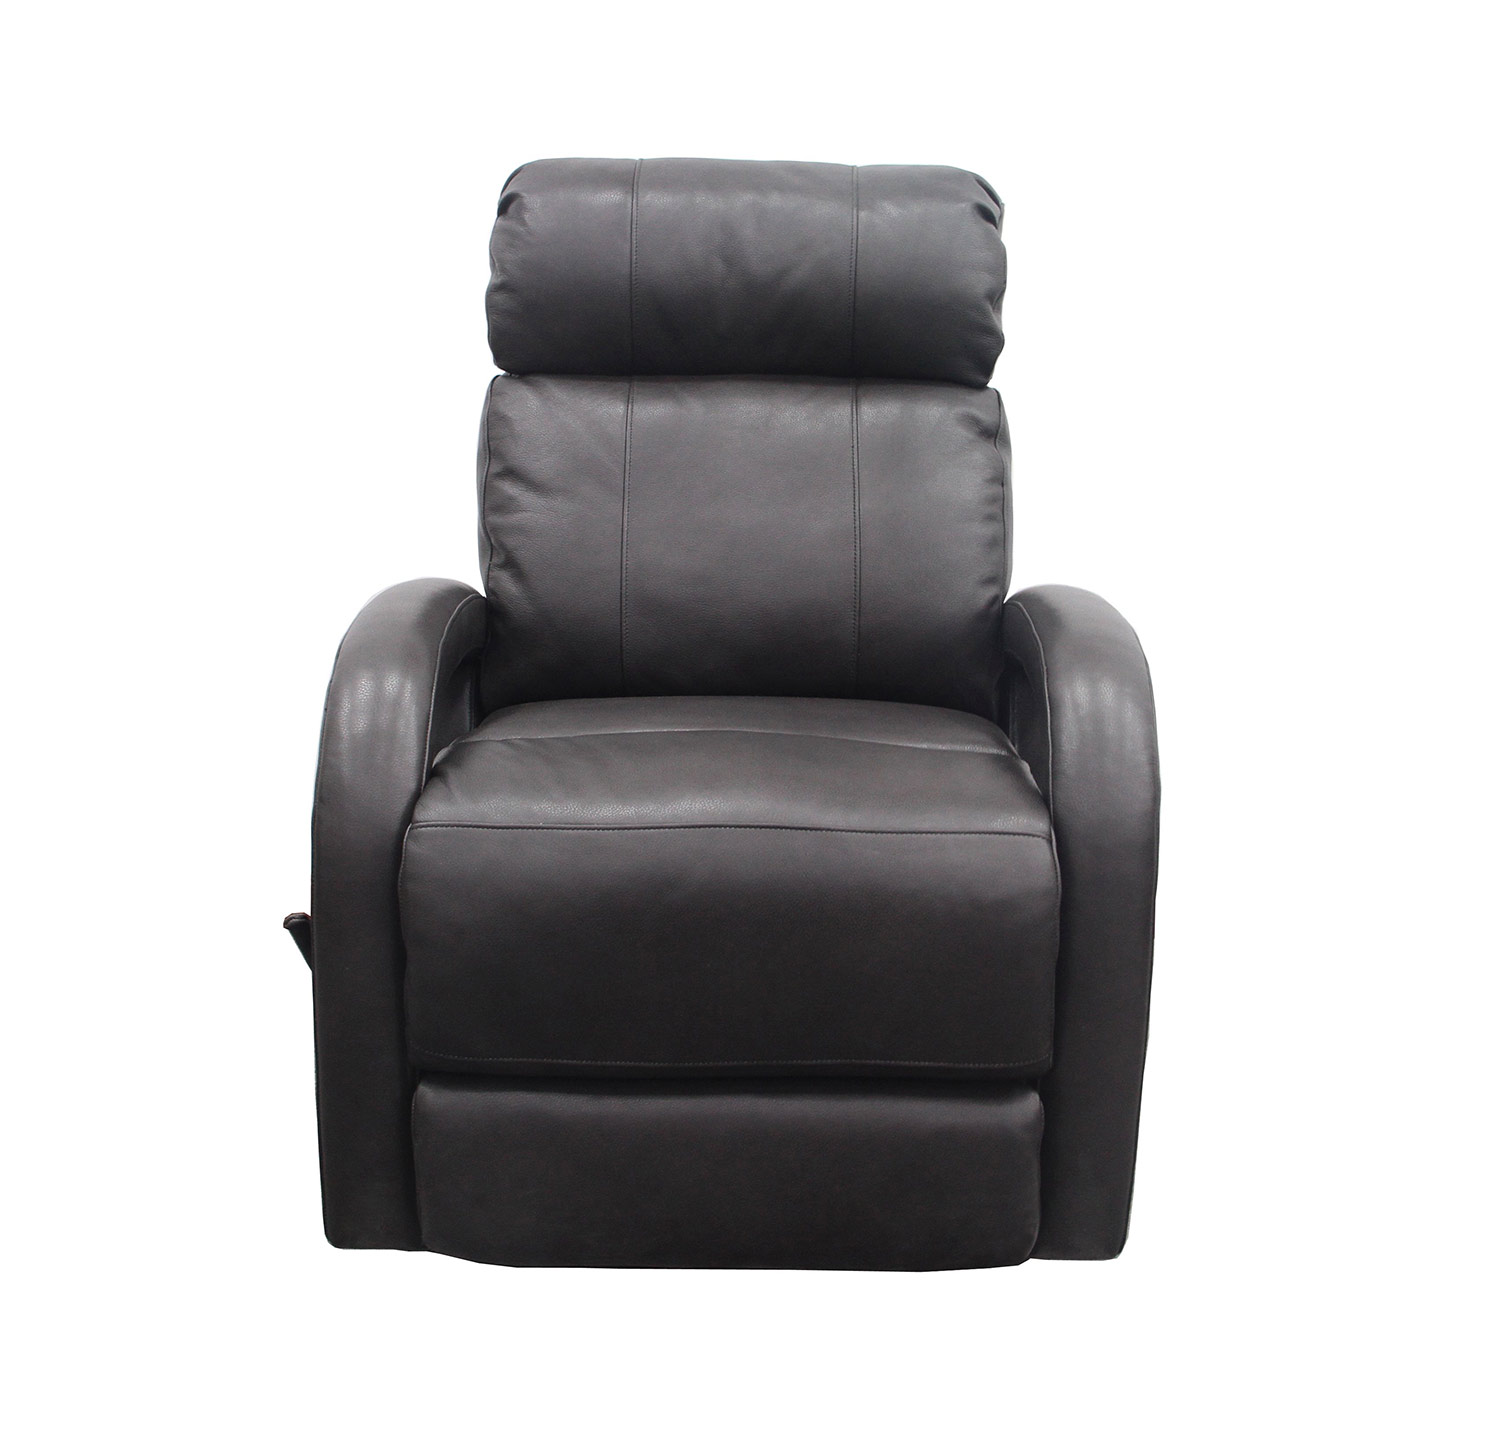 Barcalounger Harvey Swivel Glider Recliner Chair - Wrenn Gray/All Leather